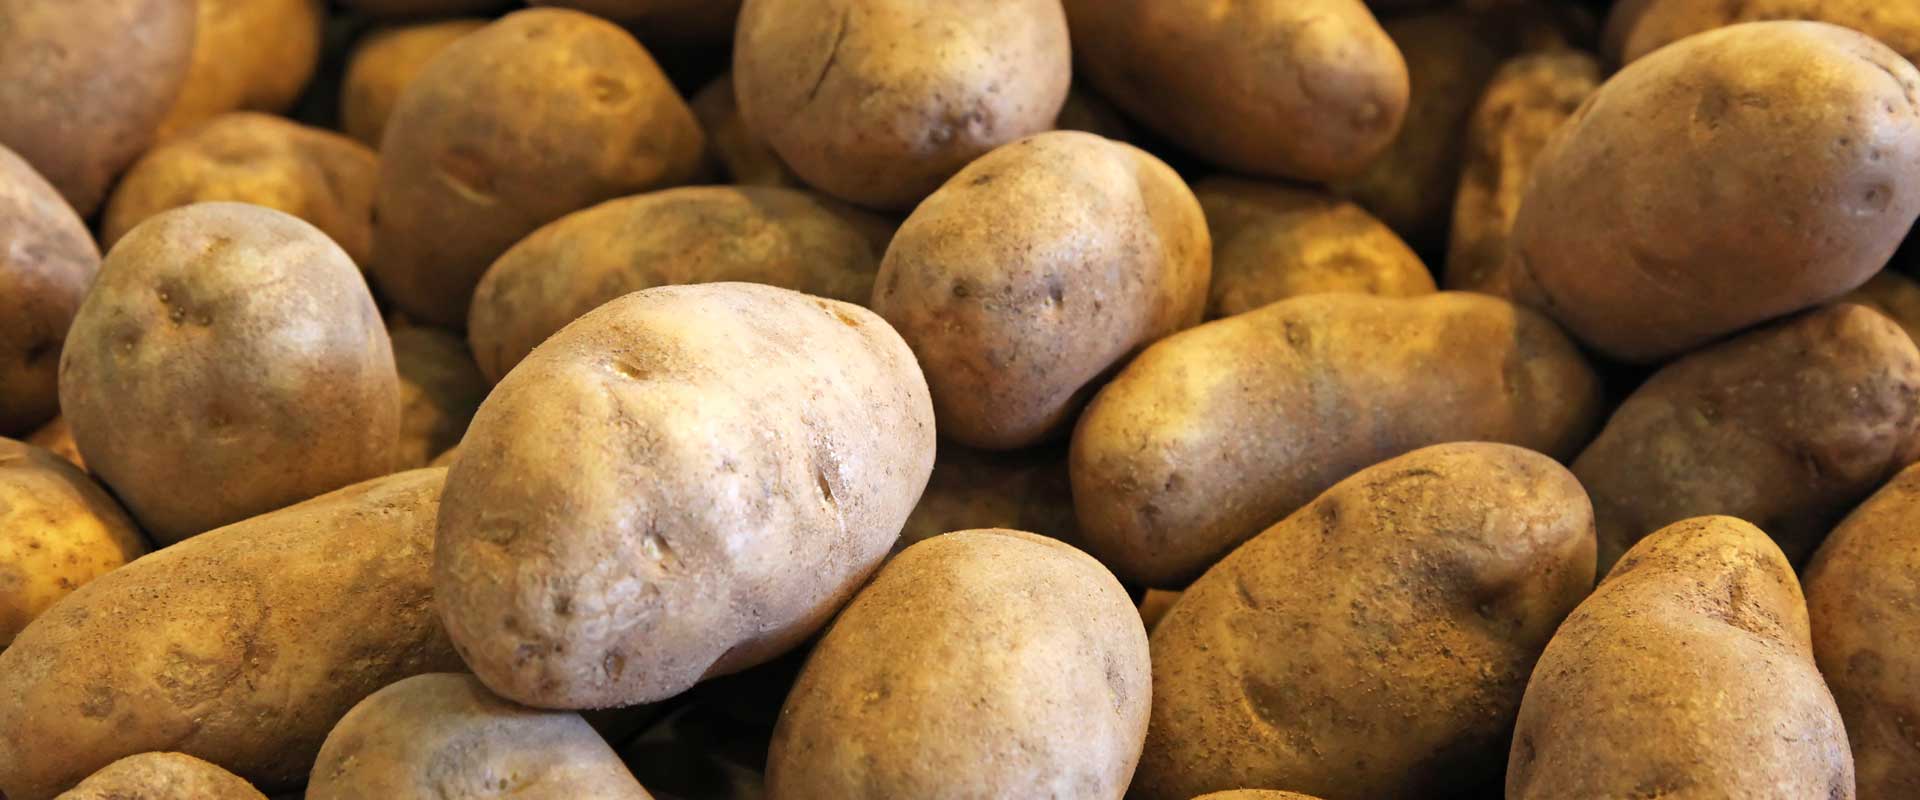 russet potatoes yields case study